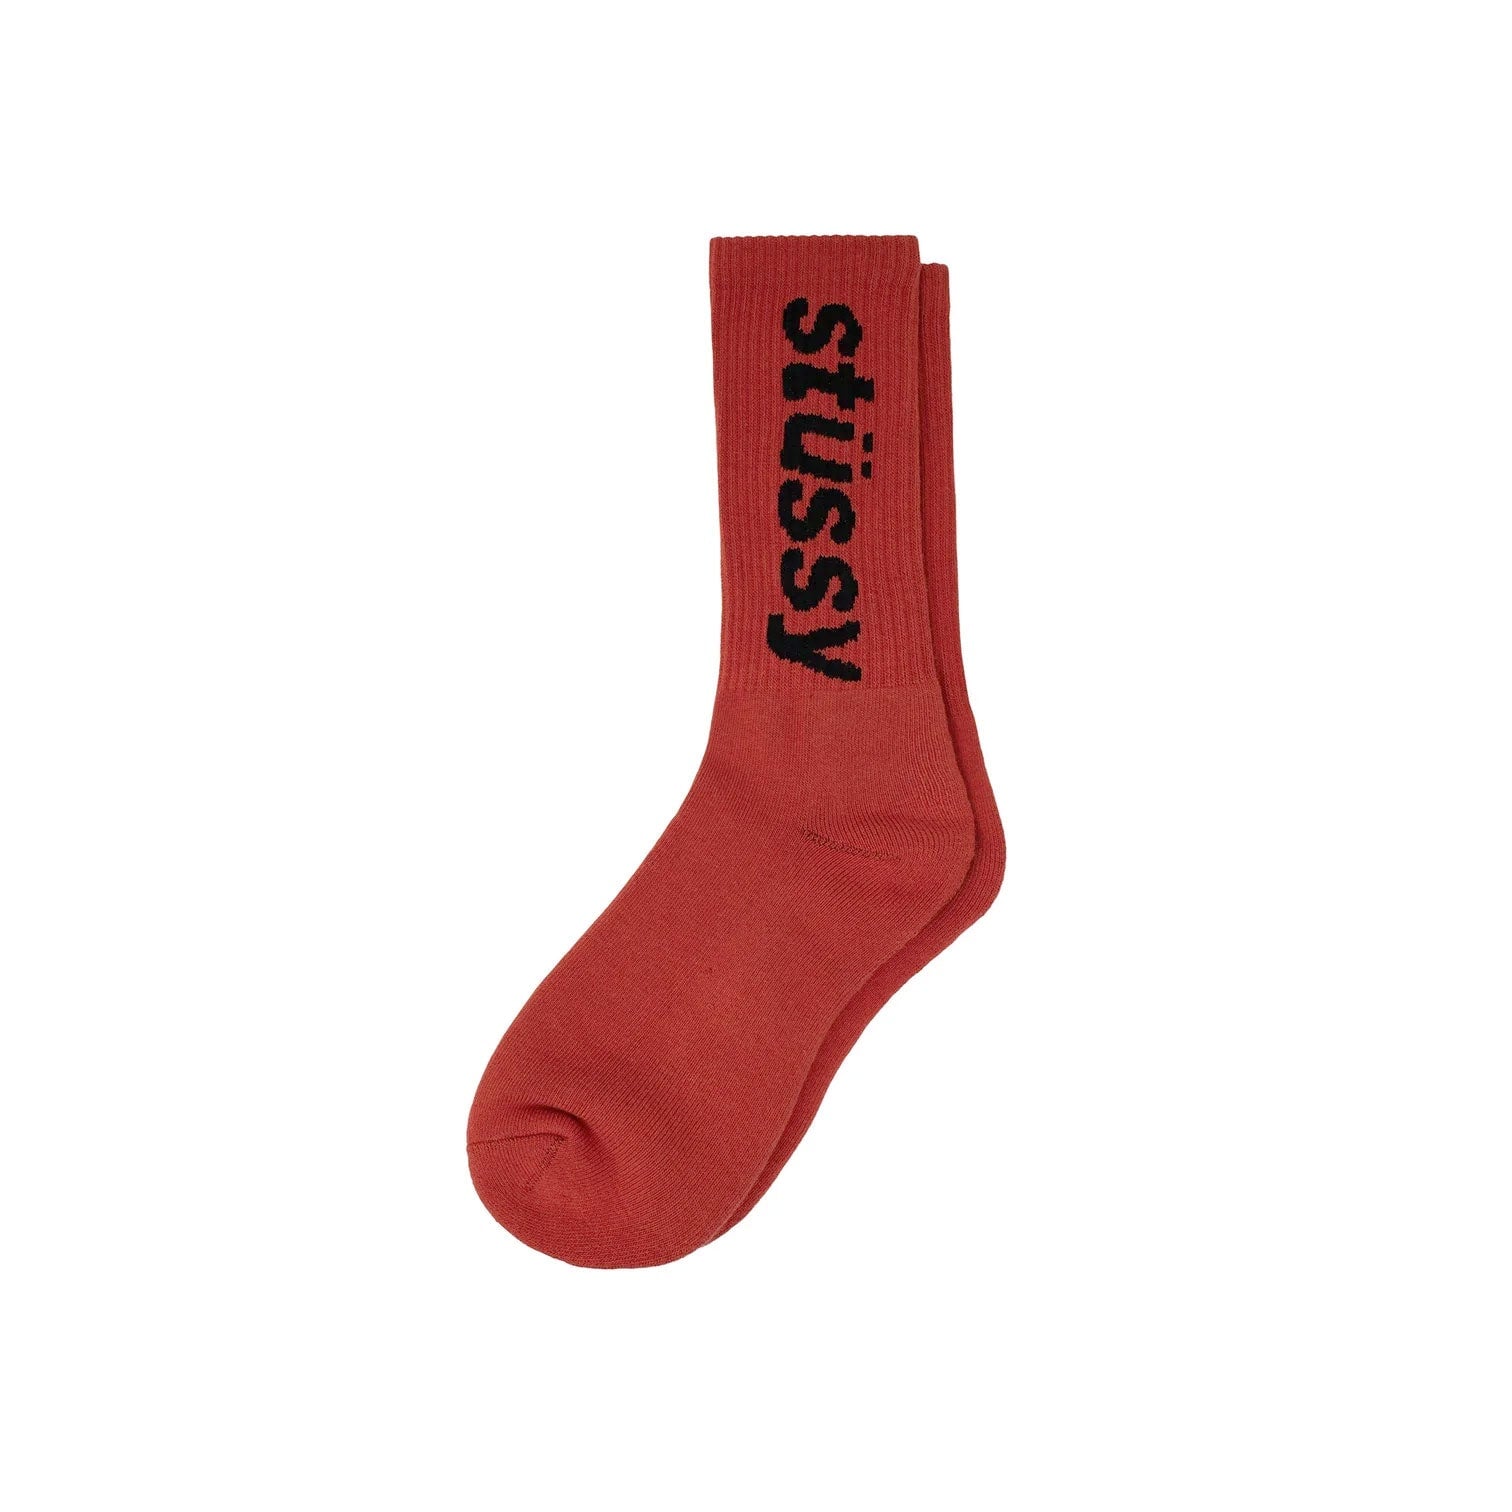 Stüssy Helvetica Crew Socks - Chili - Black Stüssy 